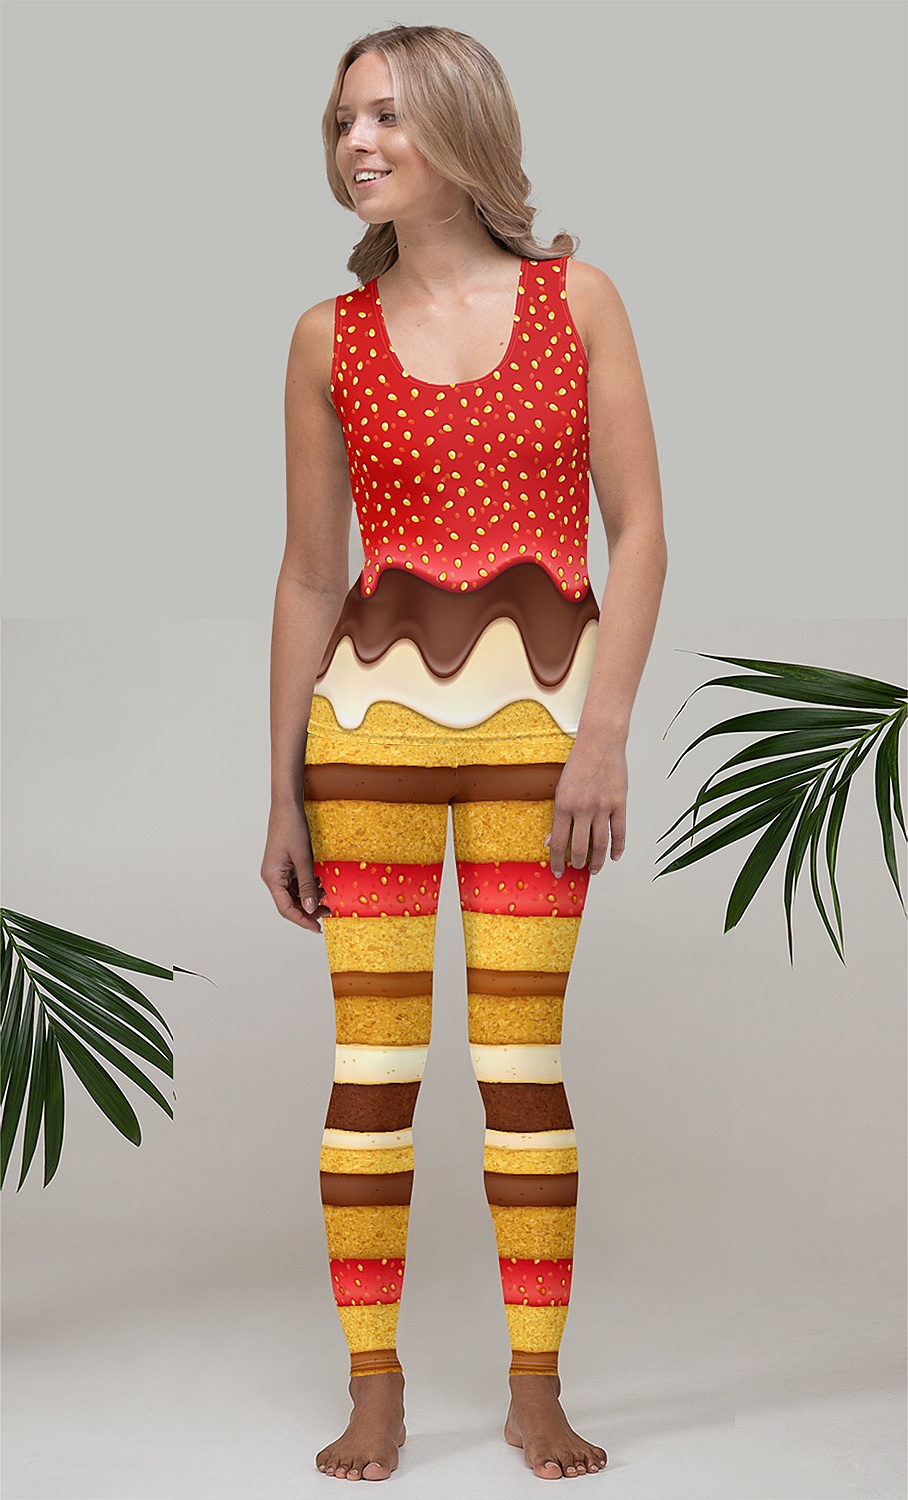 https://sportychimp.com/wp-content/uploads/2020/08/sm-strawberry-chocolate-halloween-cake-costume-sponge-cake-yoga-leggings-908x1500.jpg